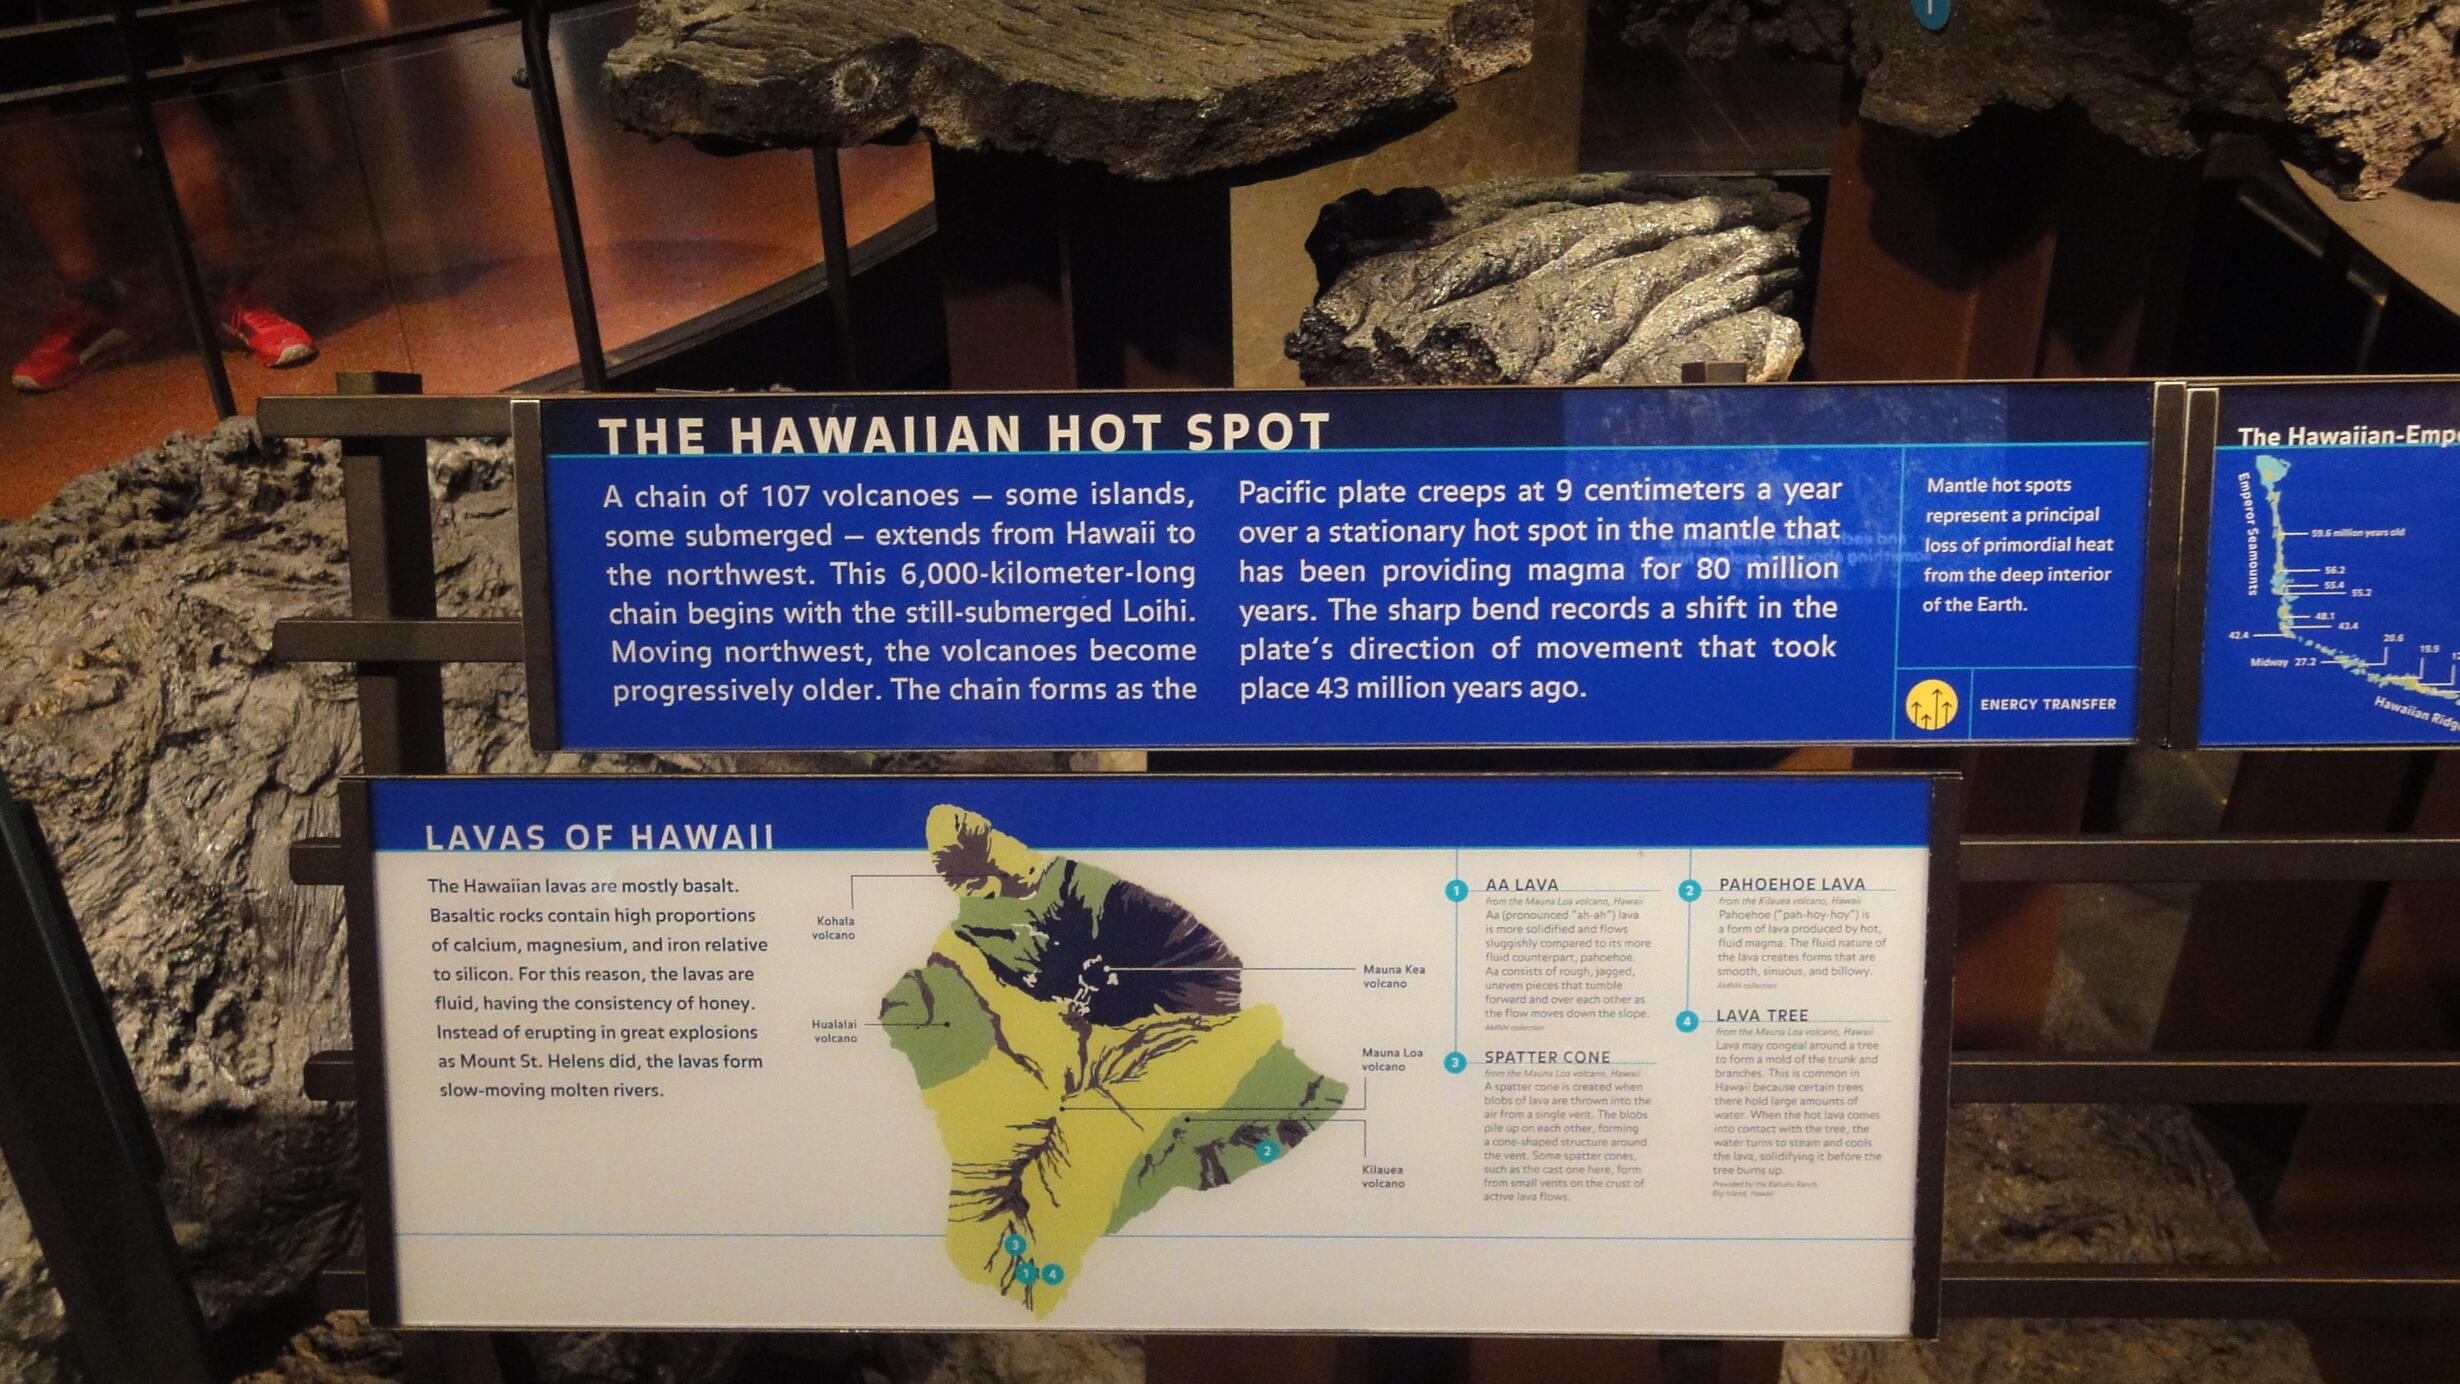 The Hawaiian hot spot